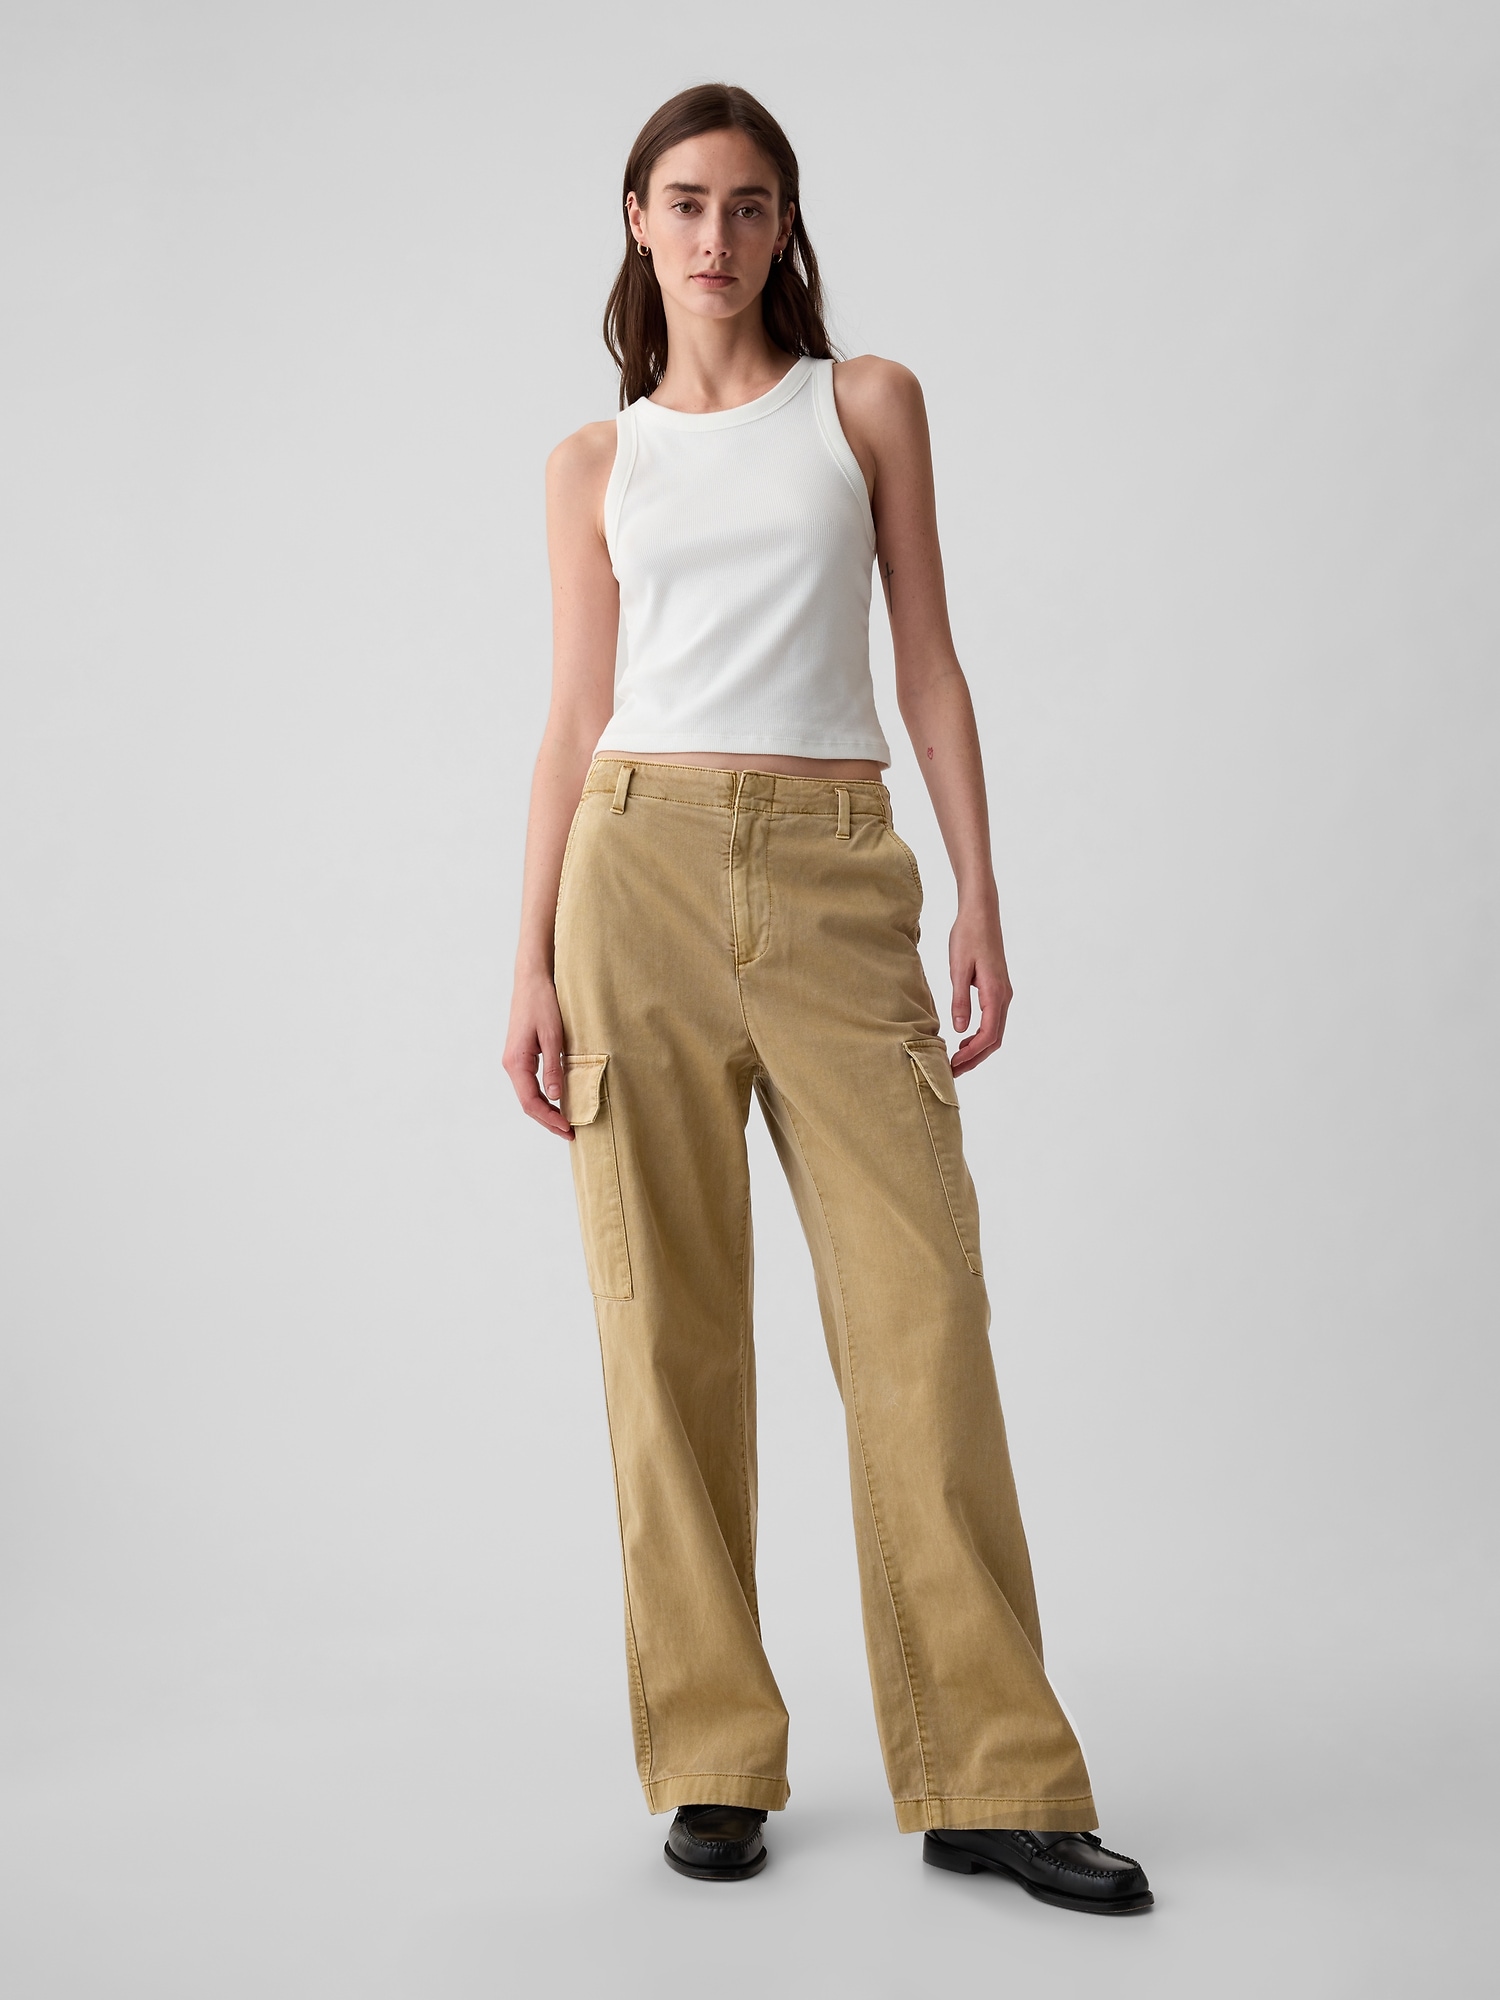 ZHIZAIHU Long Cargo Pants Women Baggy Straight Leg Pants High Waist Solid  Color Summer Trousers With Pockets Khaki S - Walmart.com